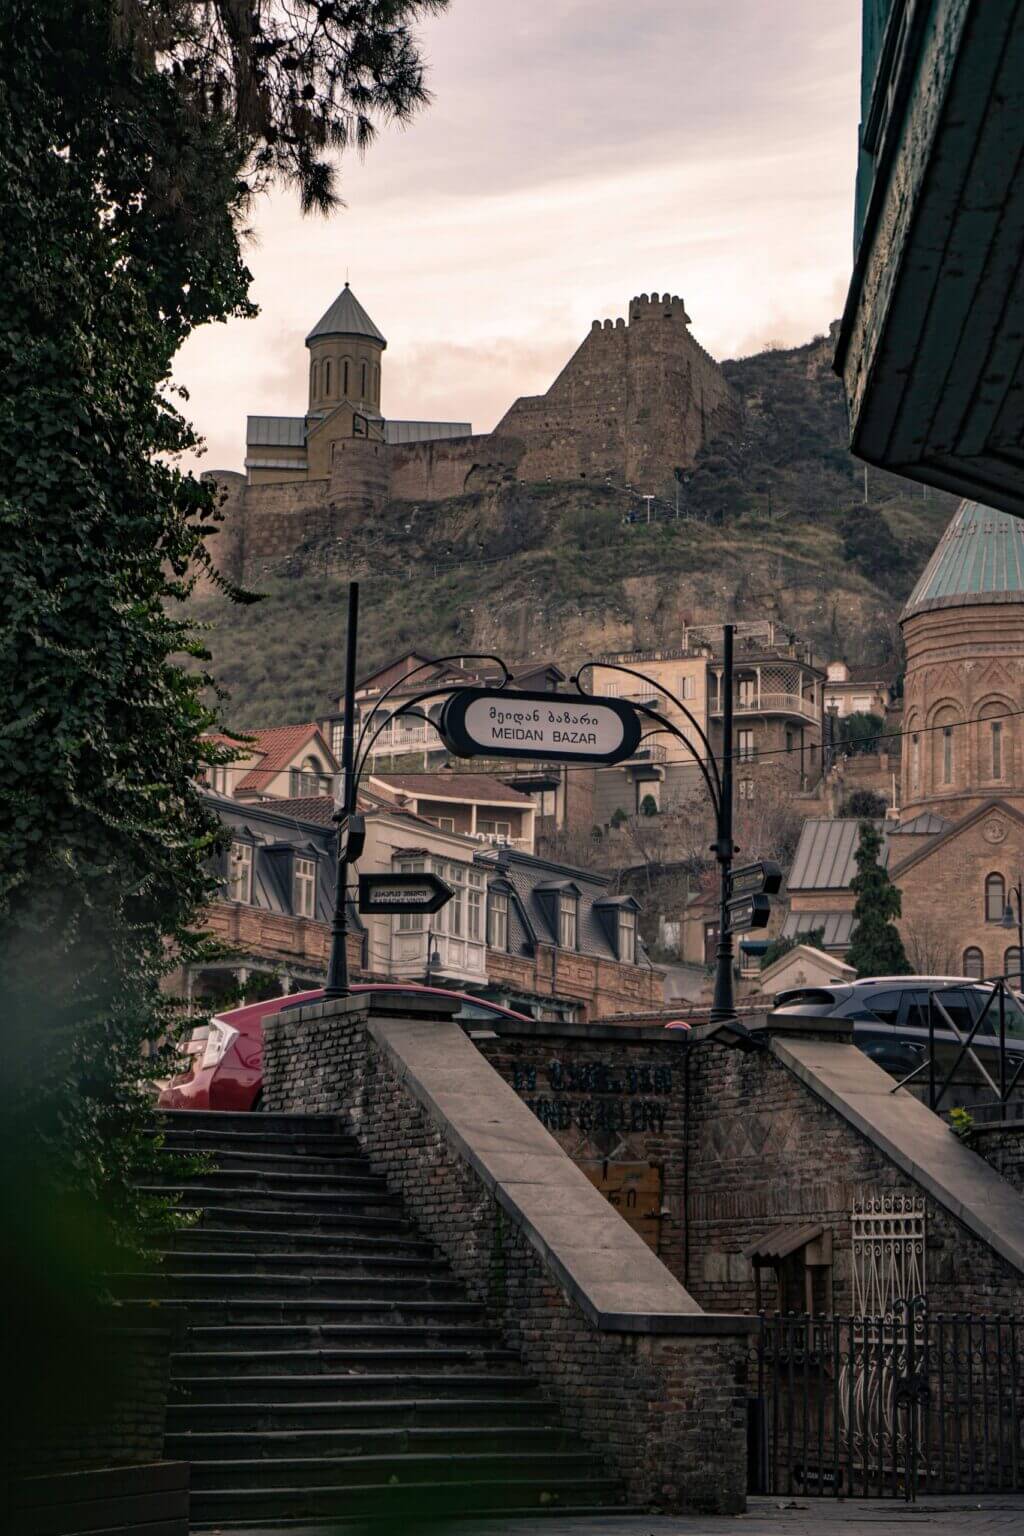 Tbilisi's photo